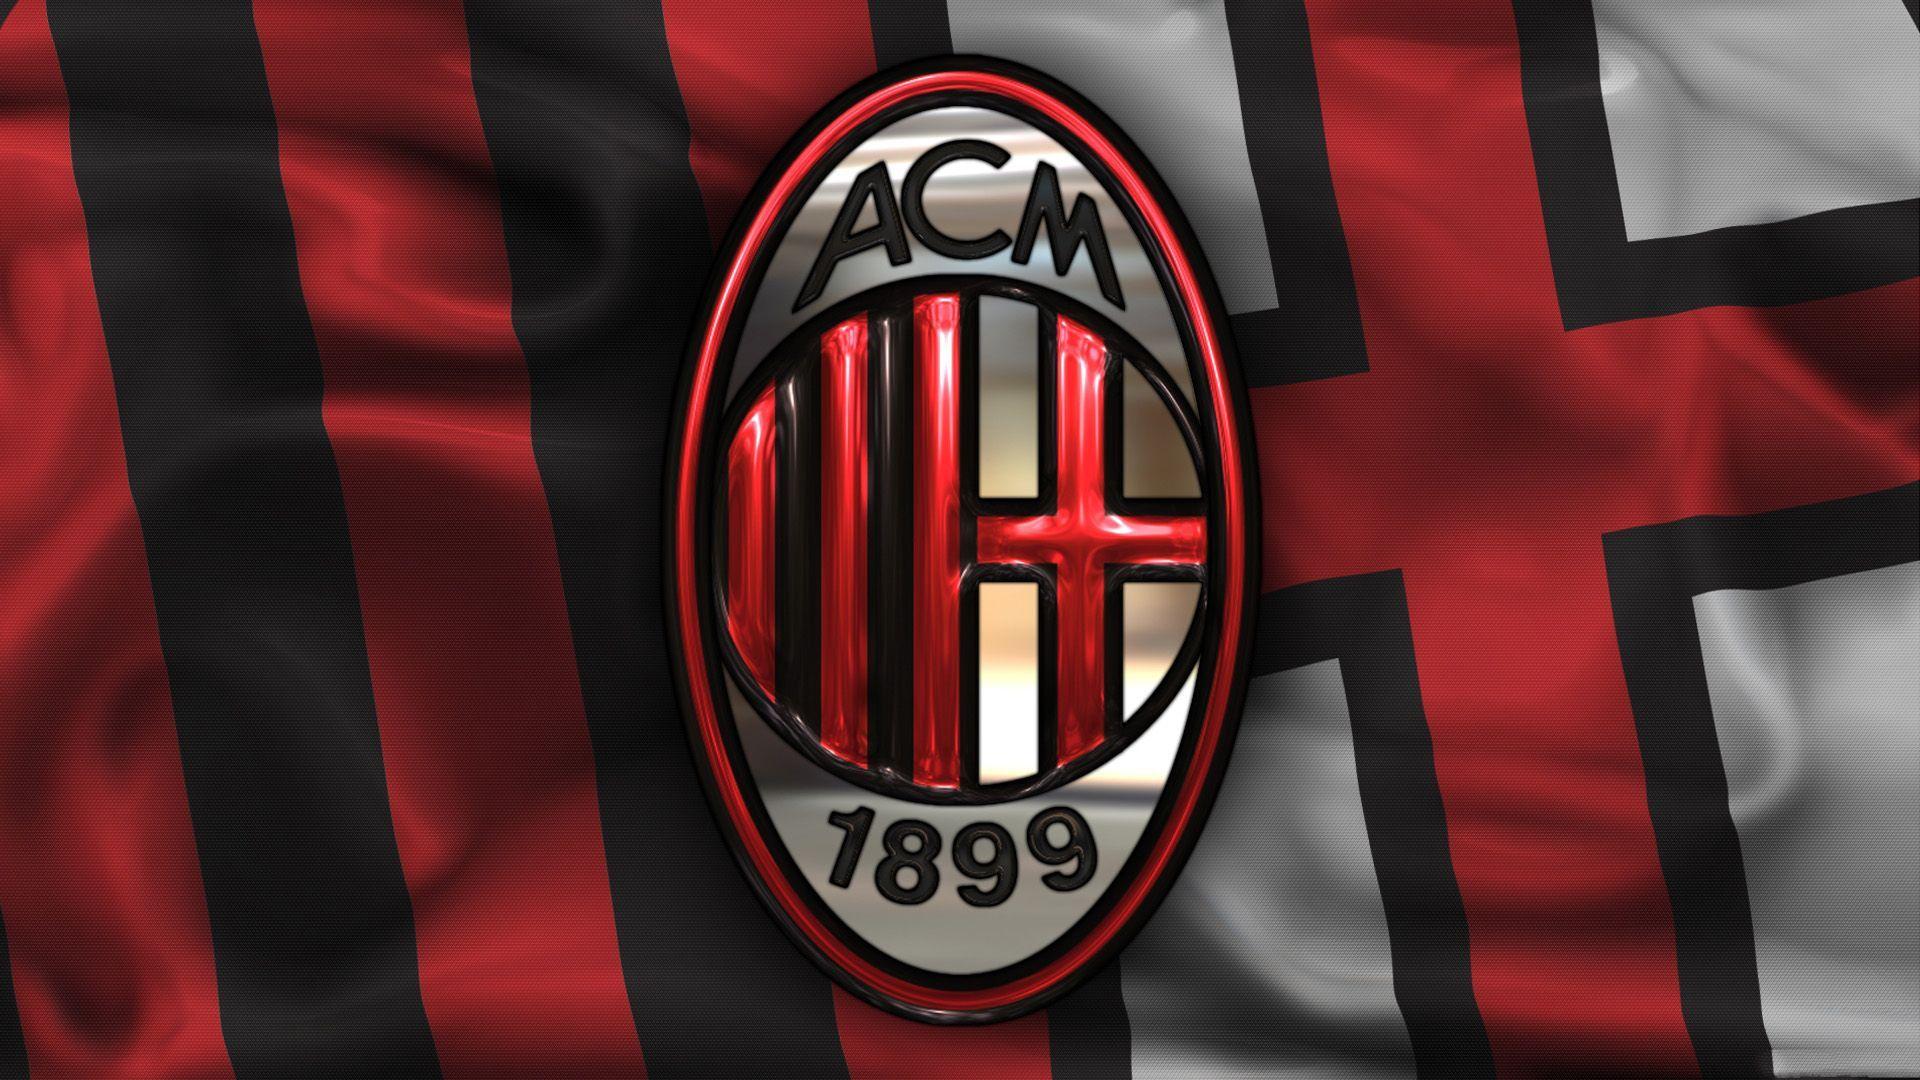 Kumpulan Wallpaper Klub AC Milan Terbaru Tahun 2015 2016. Gambar